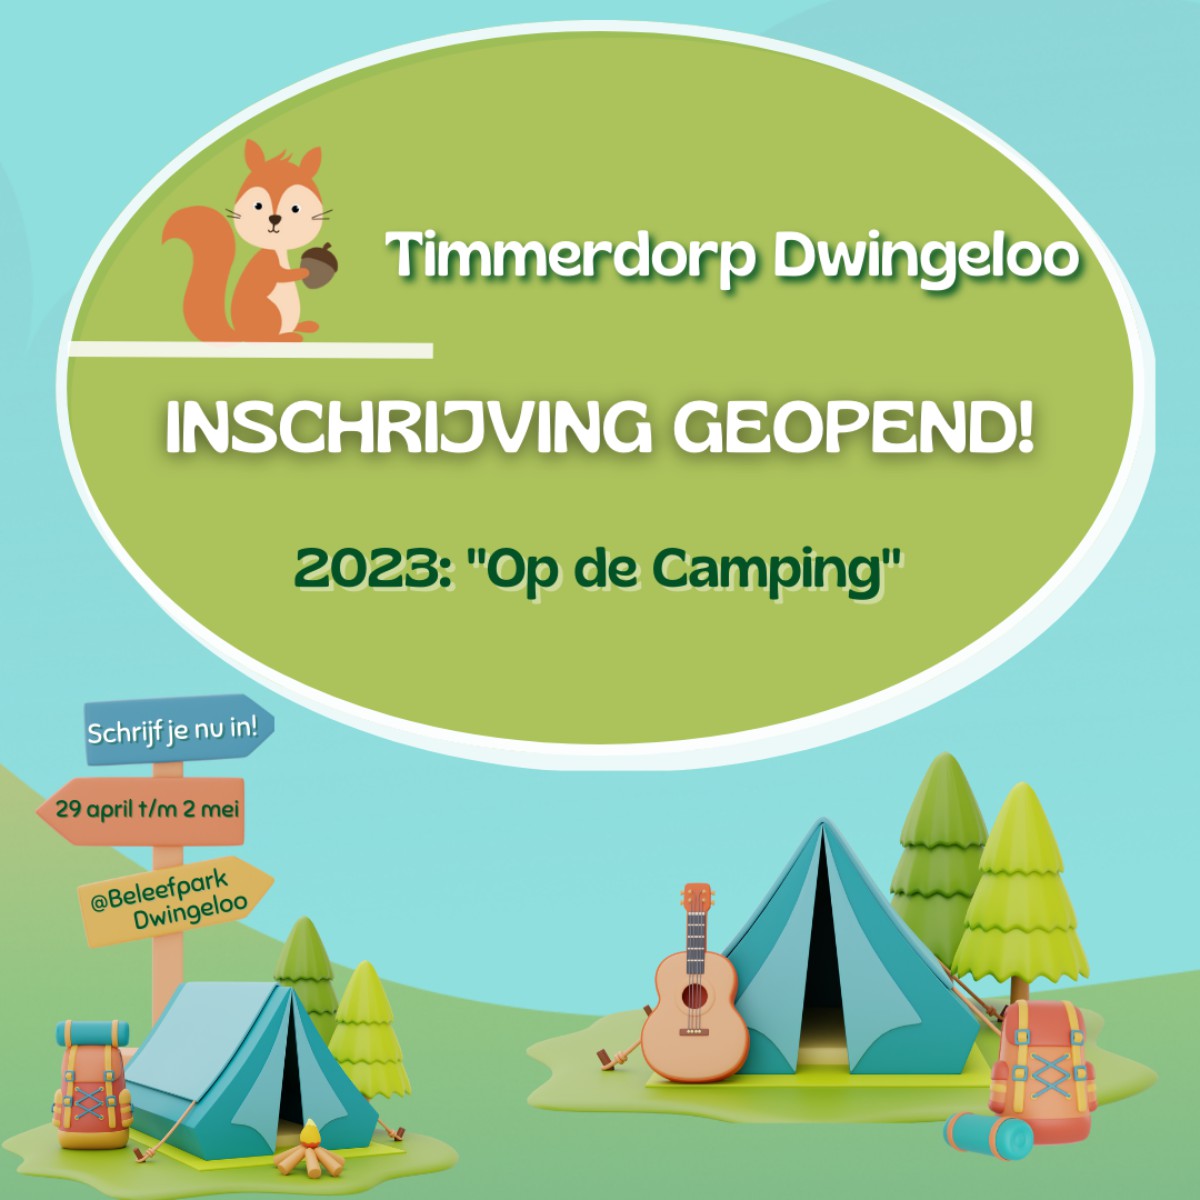 Timmerdorp Dwingeloo 2